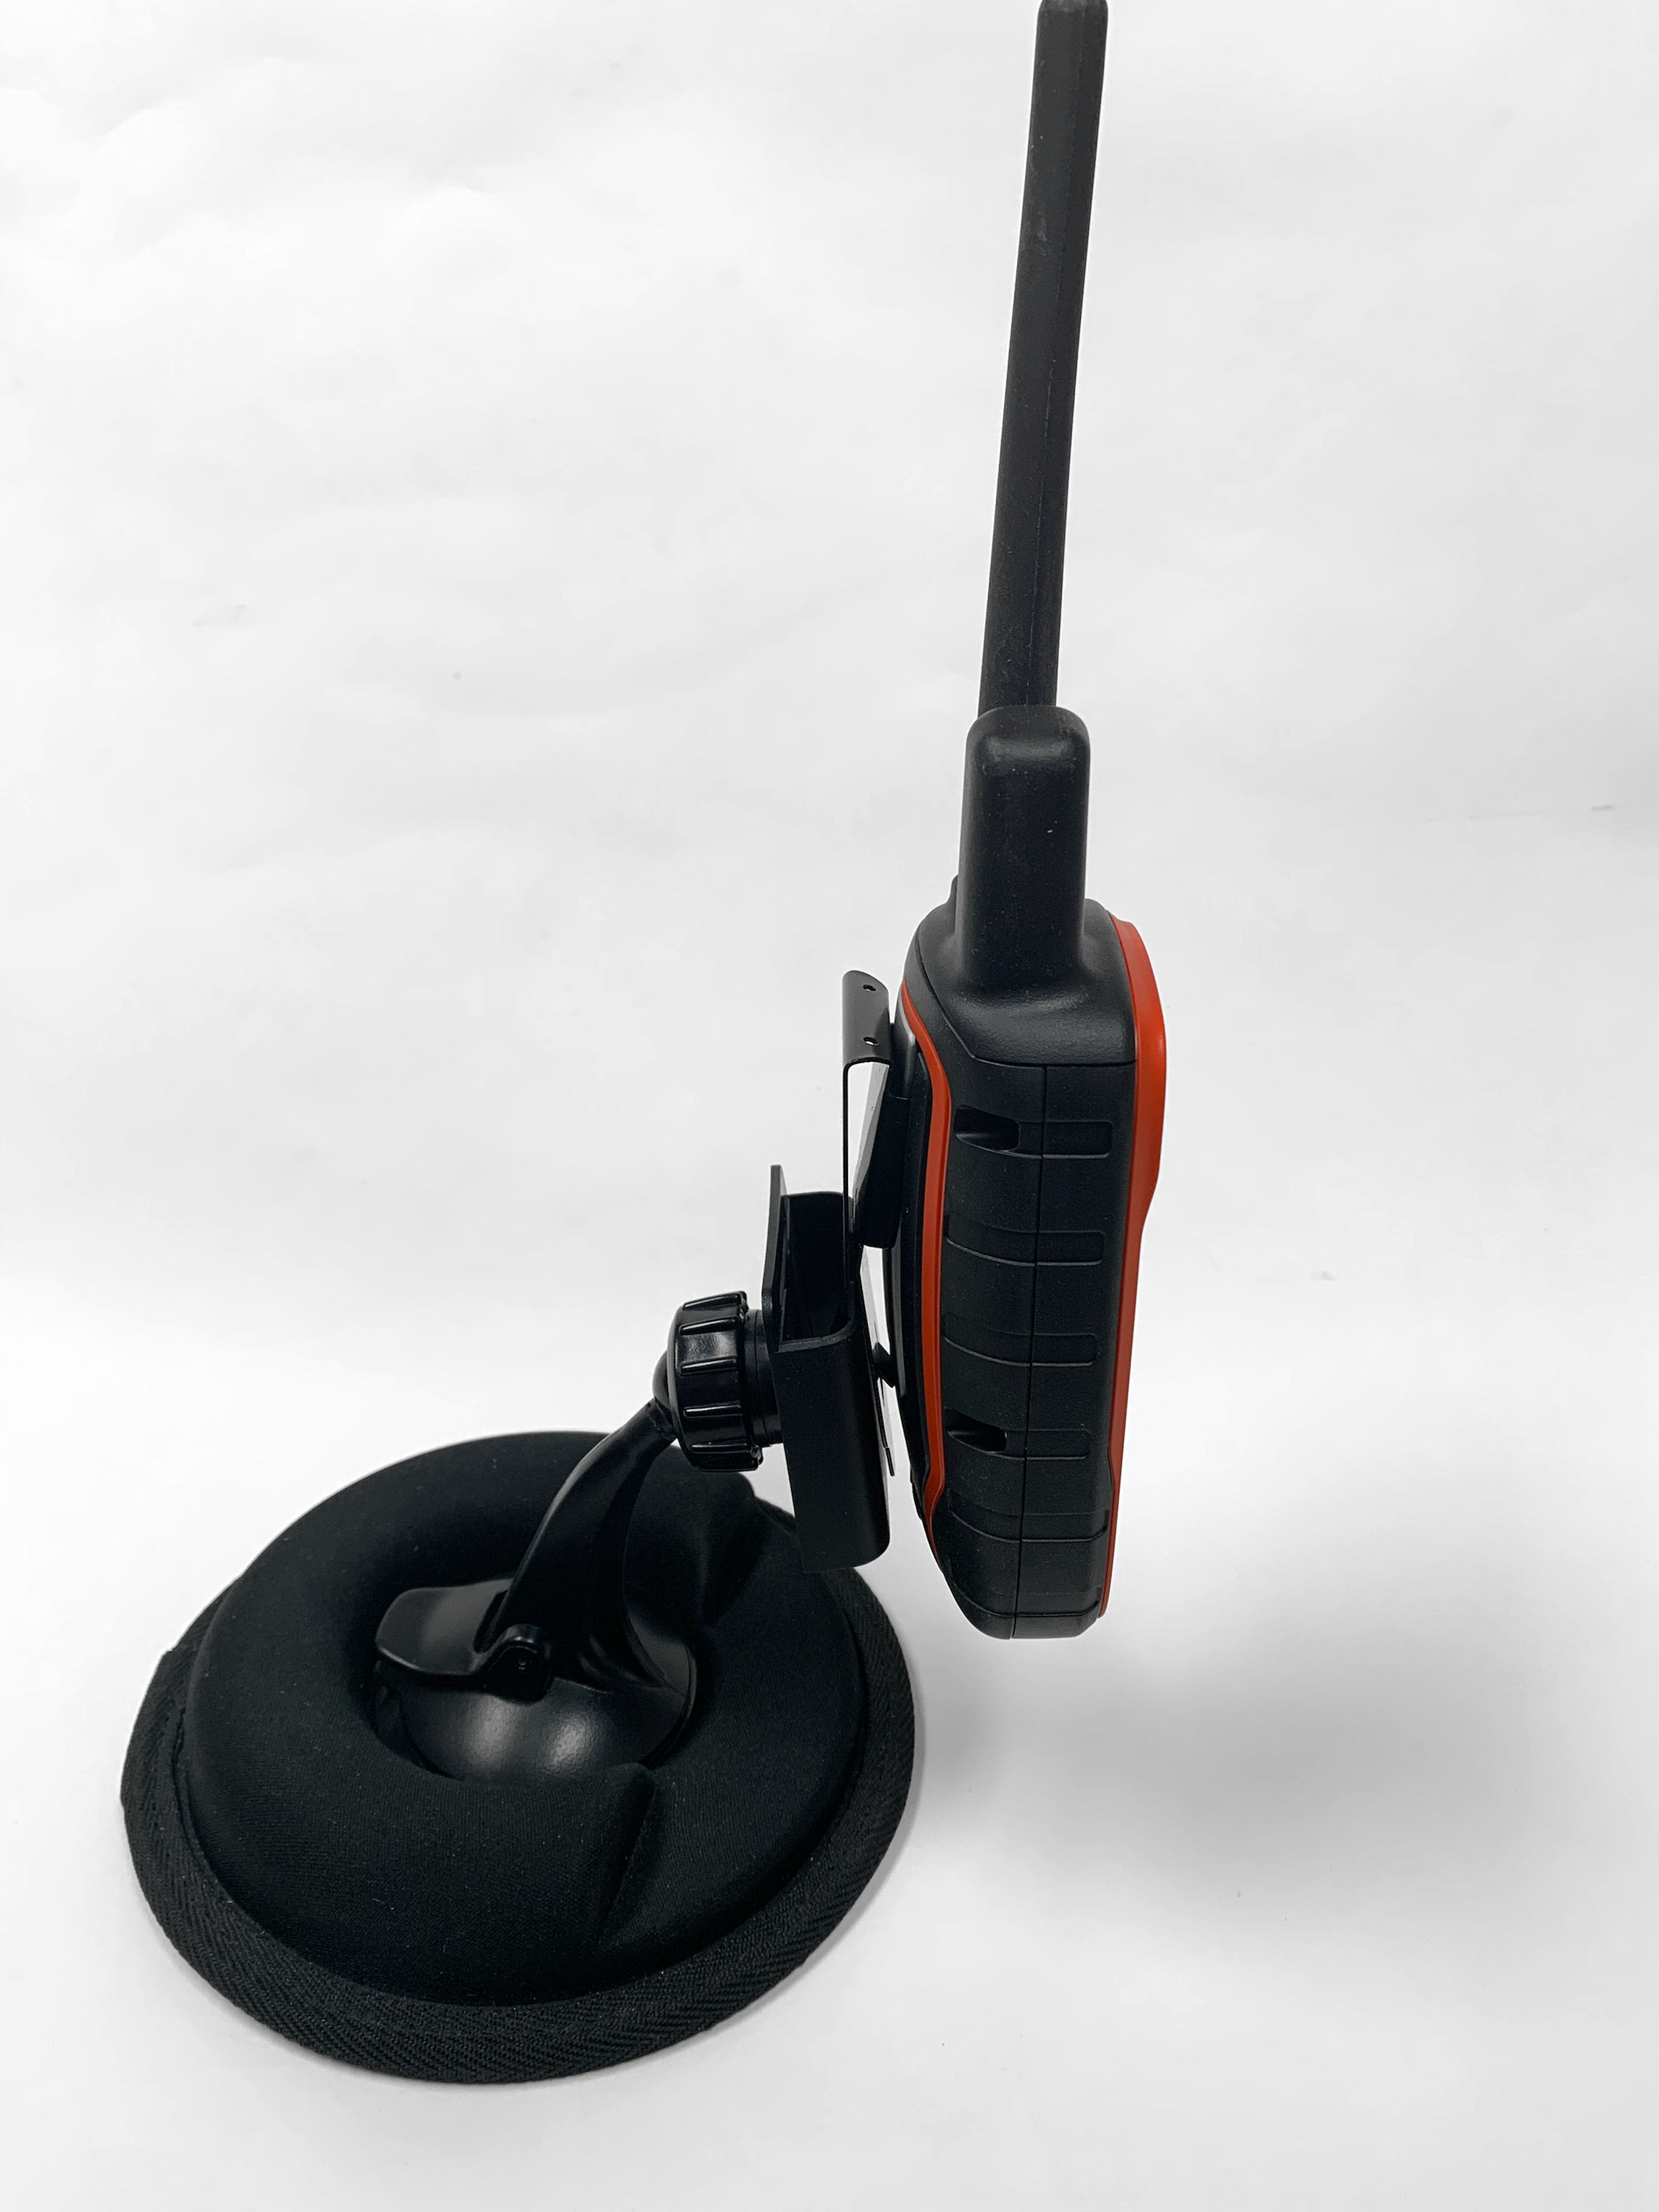 Friction Dash Mount with Klipzer connector for Garmin Handheld